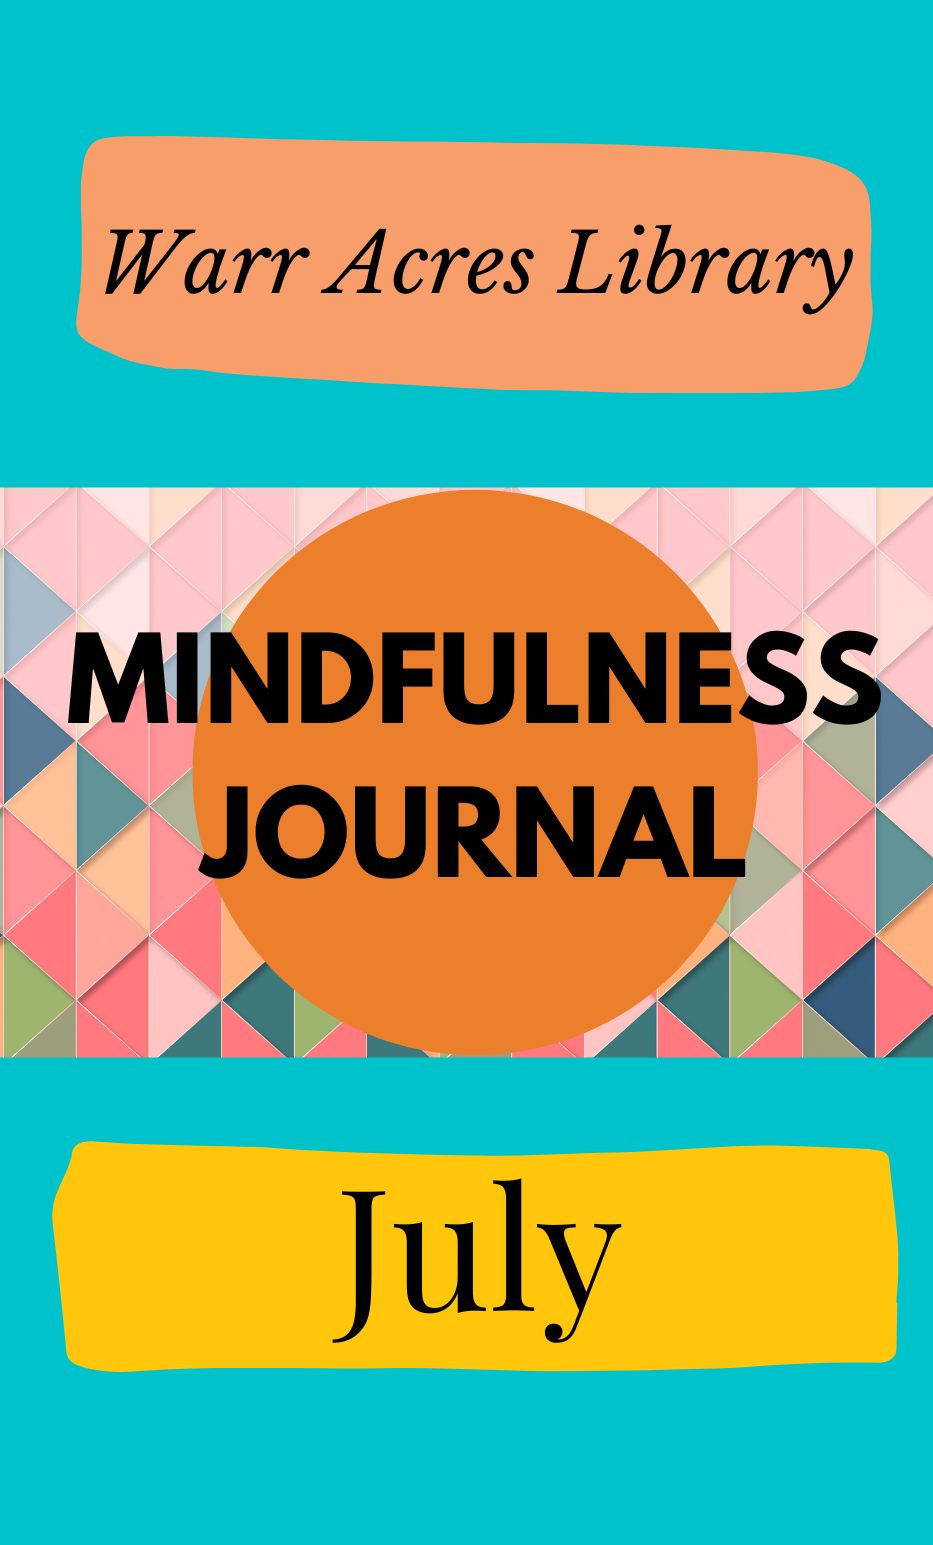 July Mindfulness Journal Metropolitan Library System